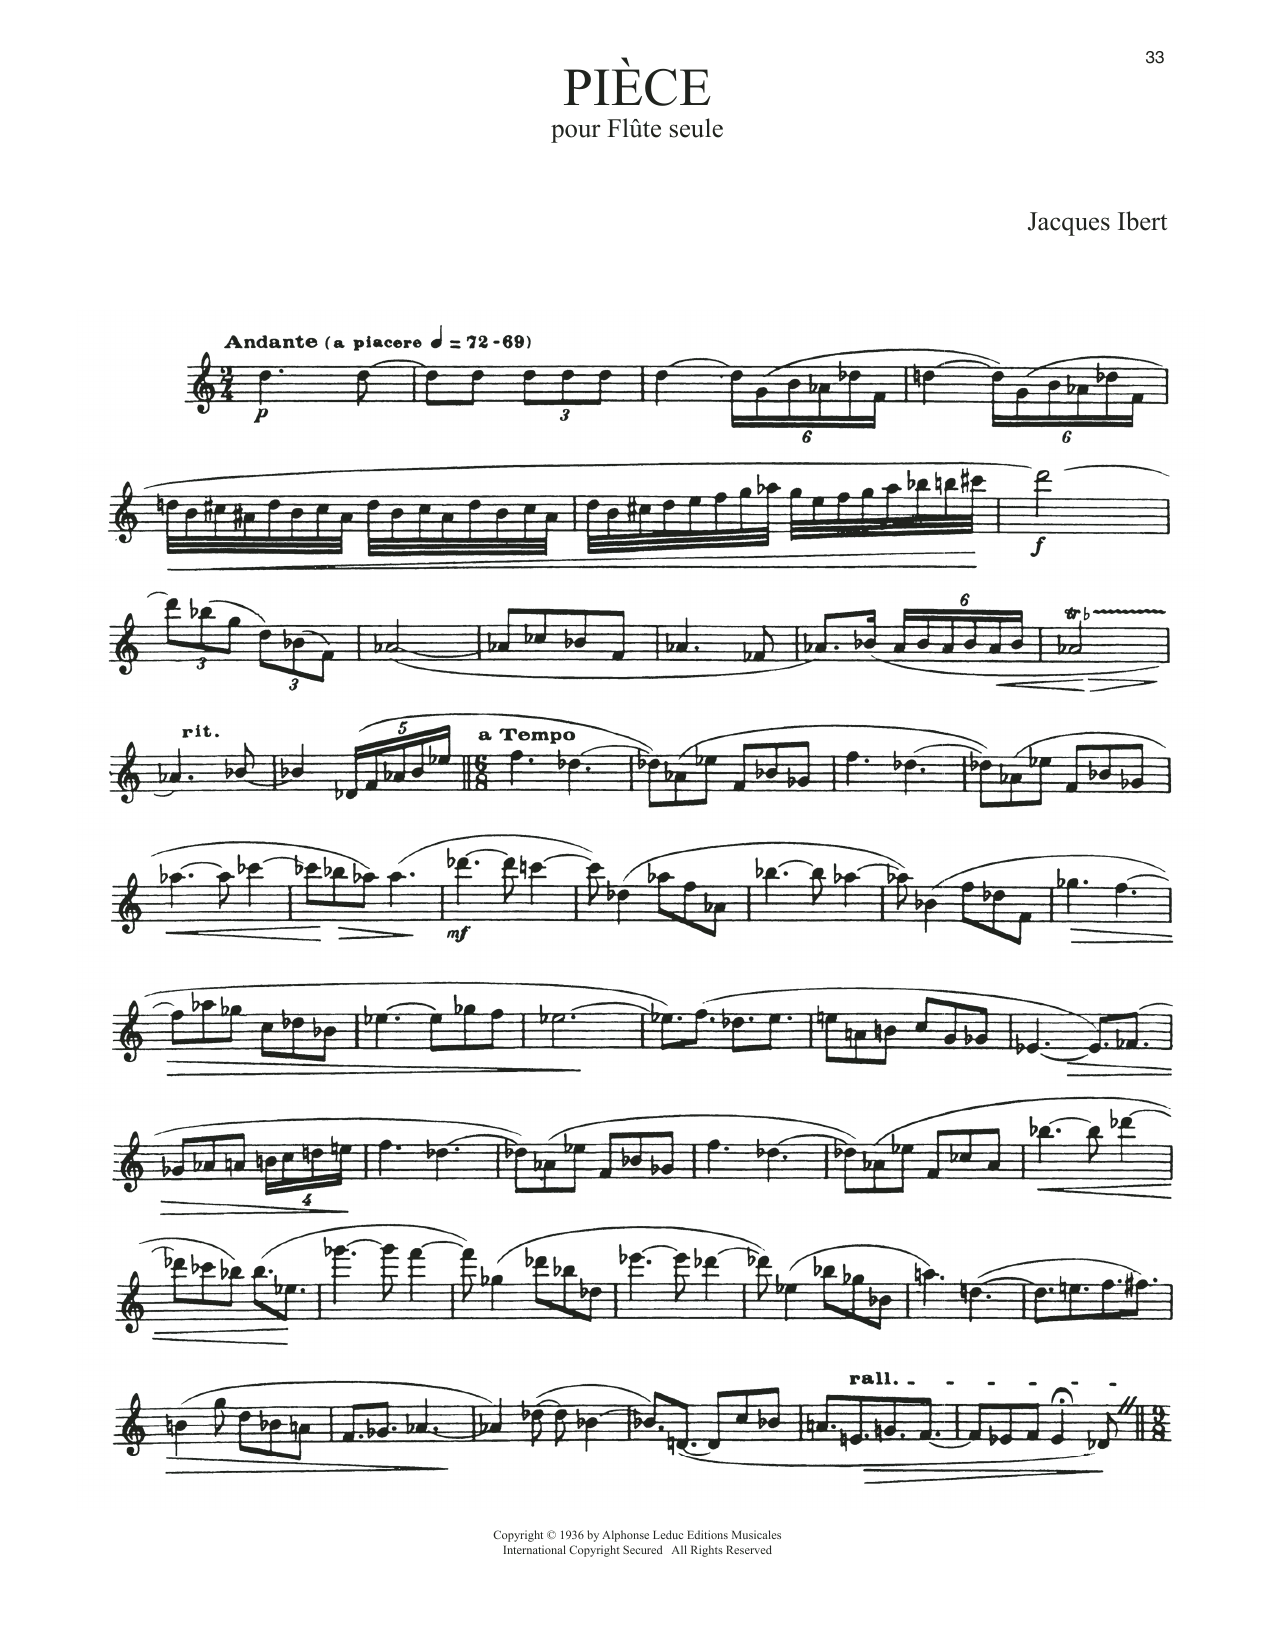 Jacques Ibert Piece Pour Flute Seule Sheet Music Notes & Chords for Flute Solo - Download or Print PDF